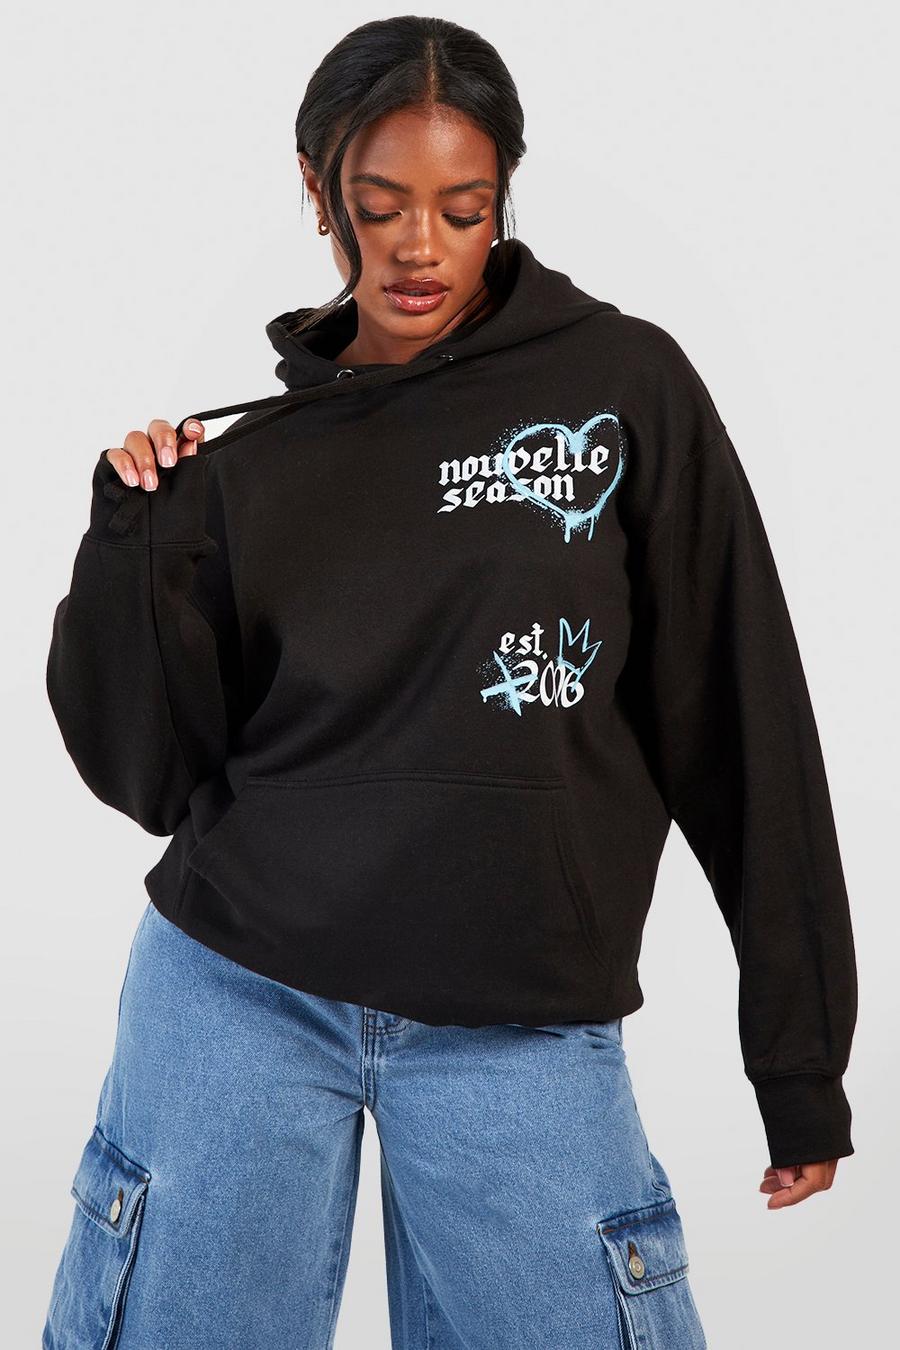 Women's sweatshirt DCH family, oversized hoodies model: Jay, fabric:  Futer 3x thread loop, color: black